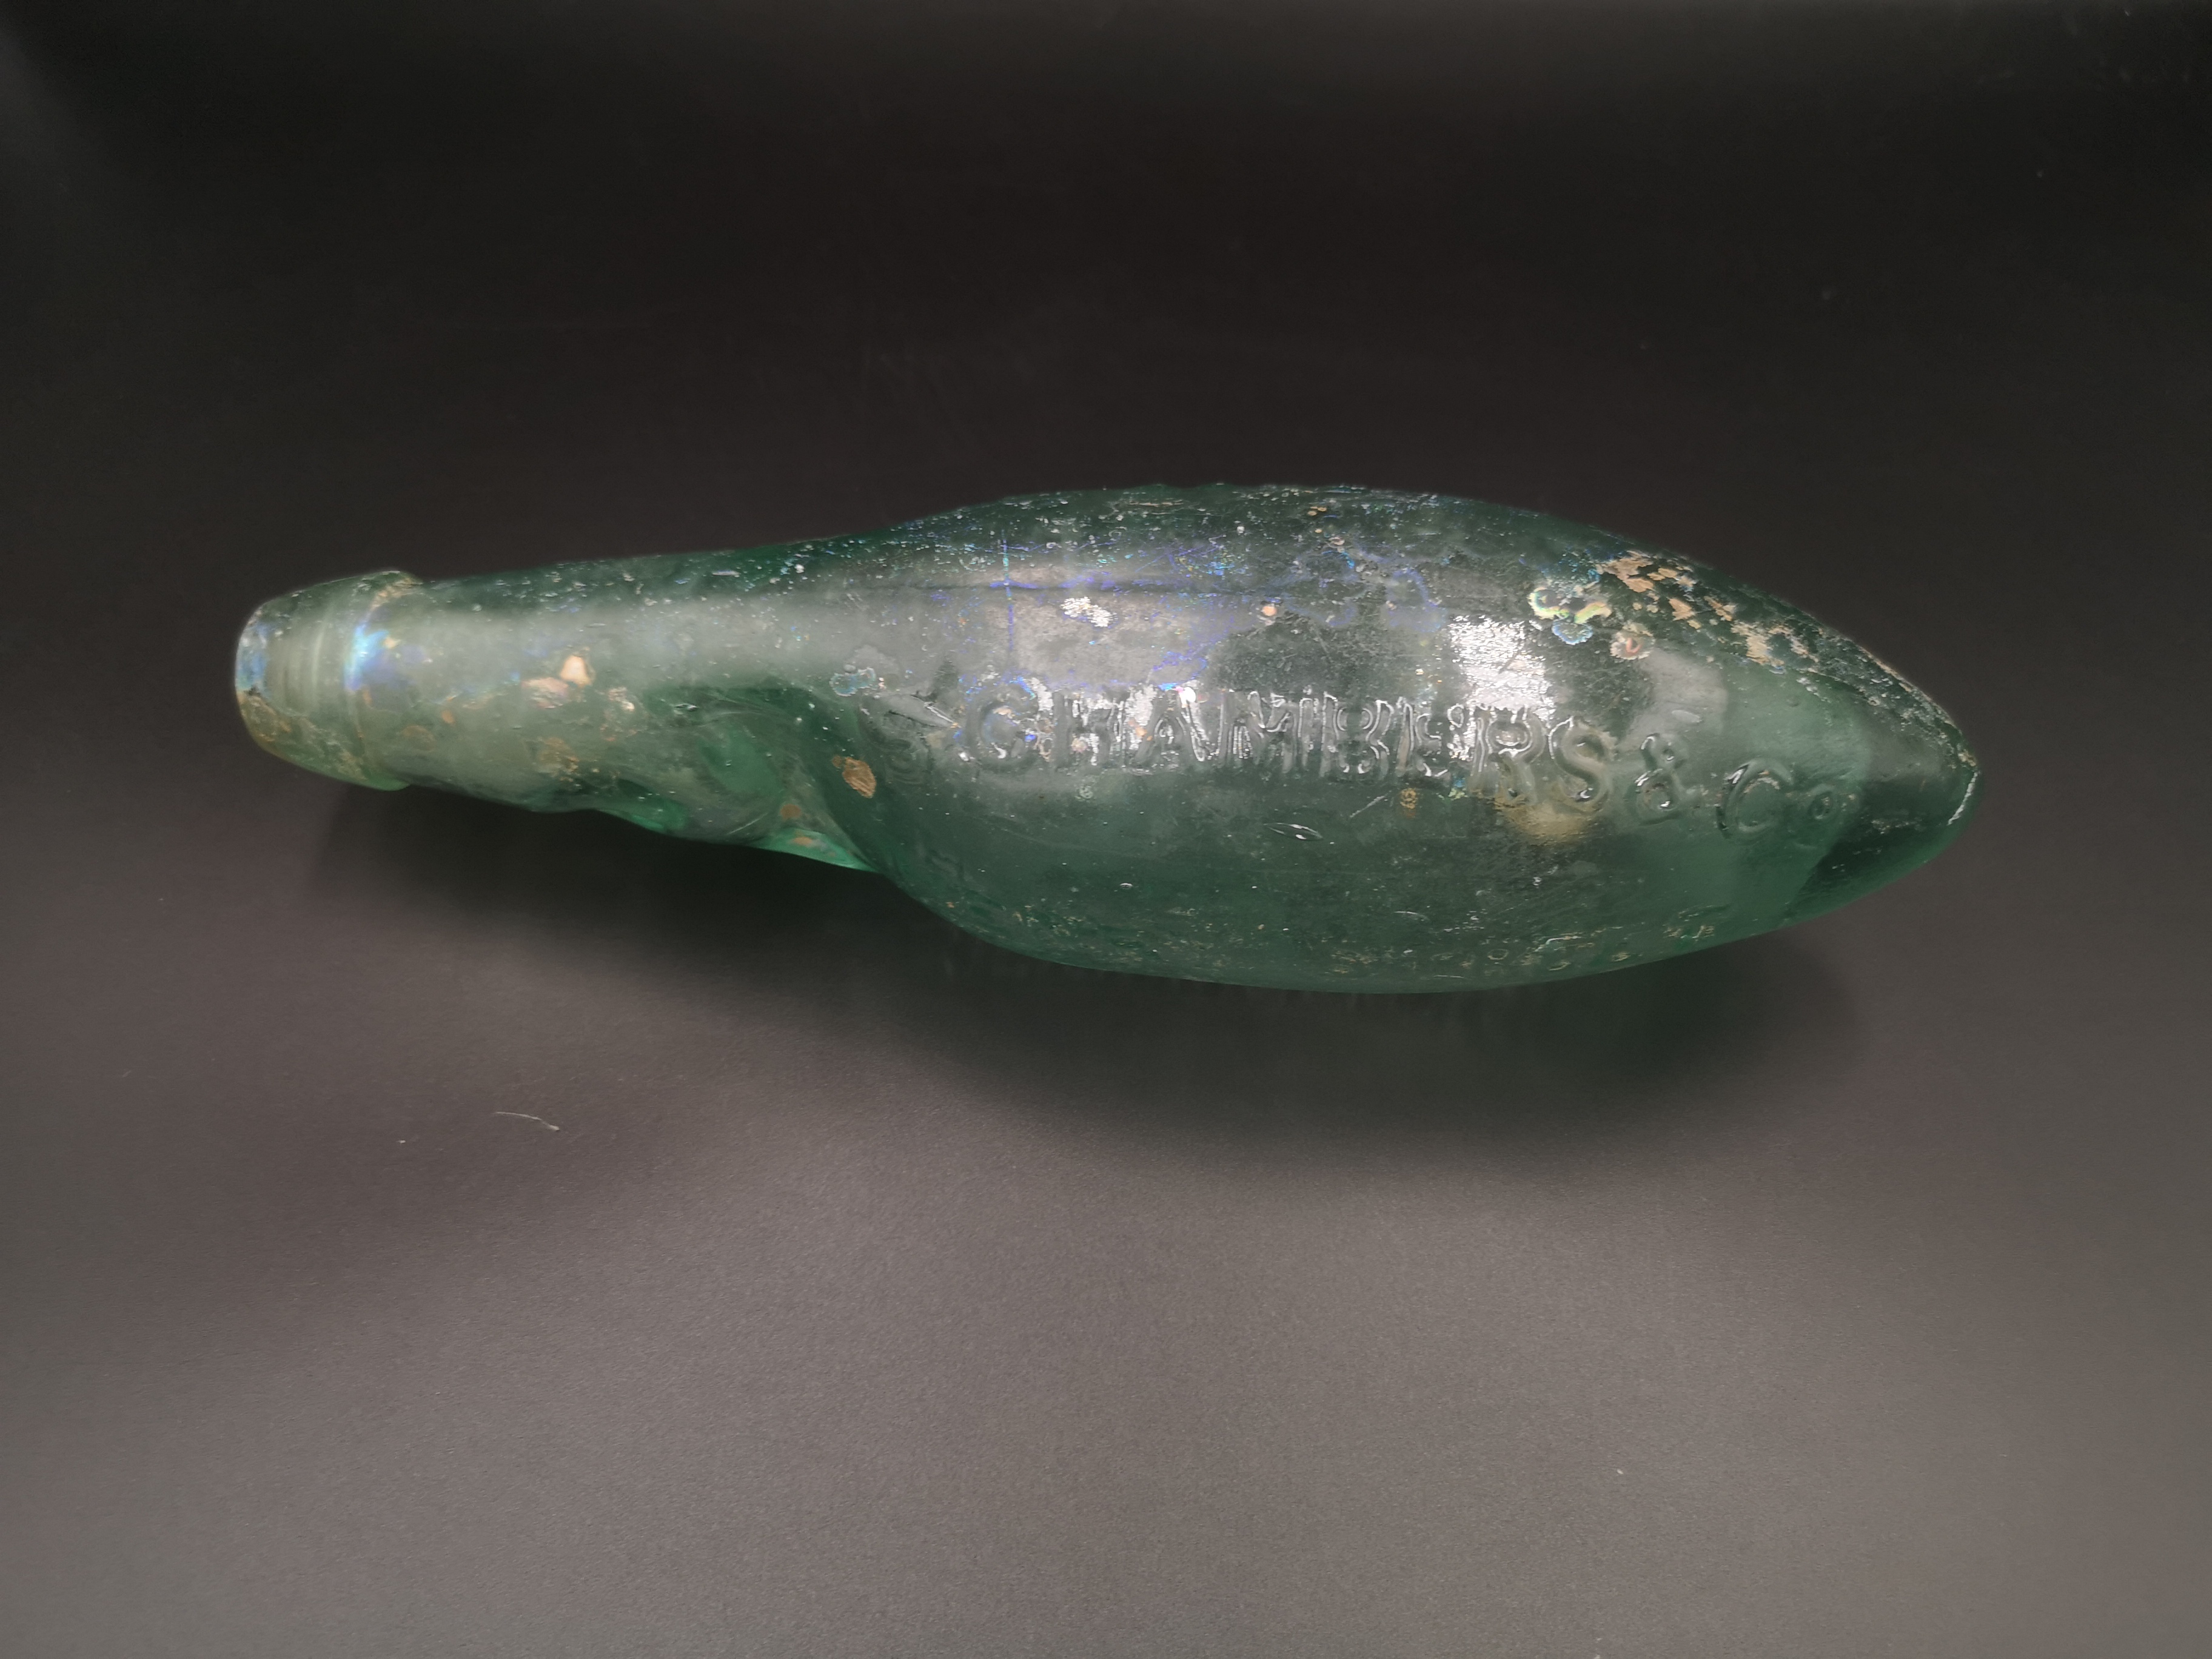 A Codd's patent glass bottle